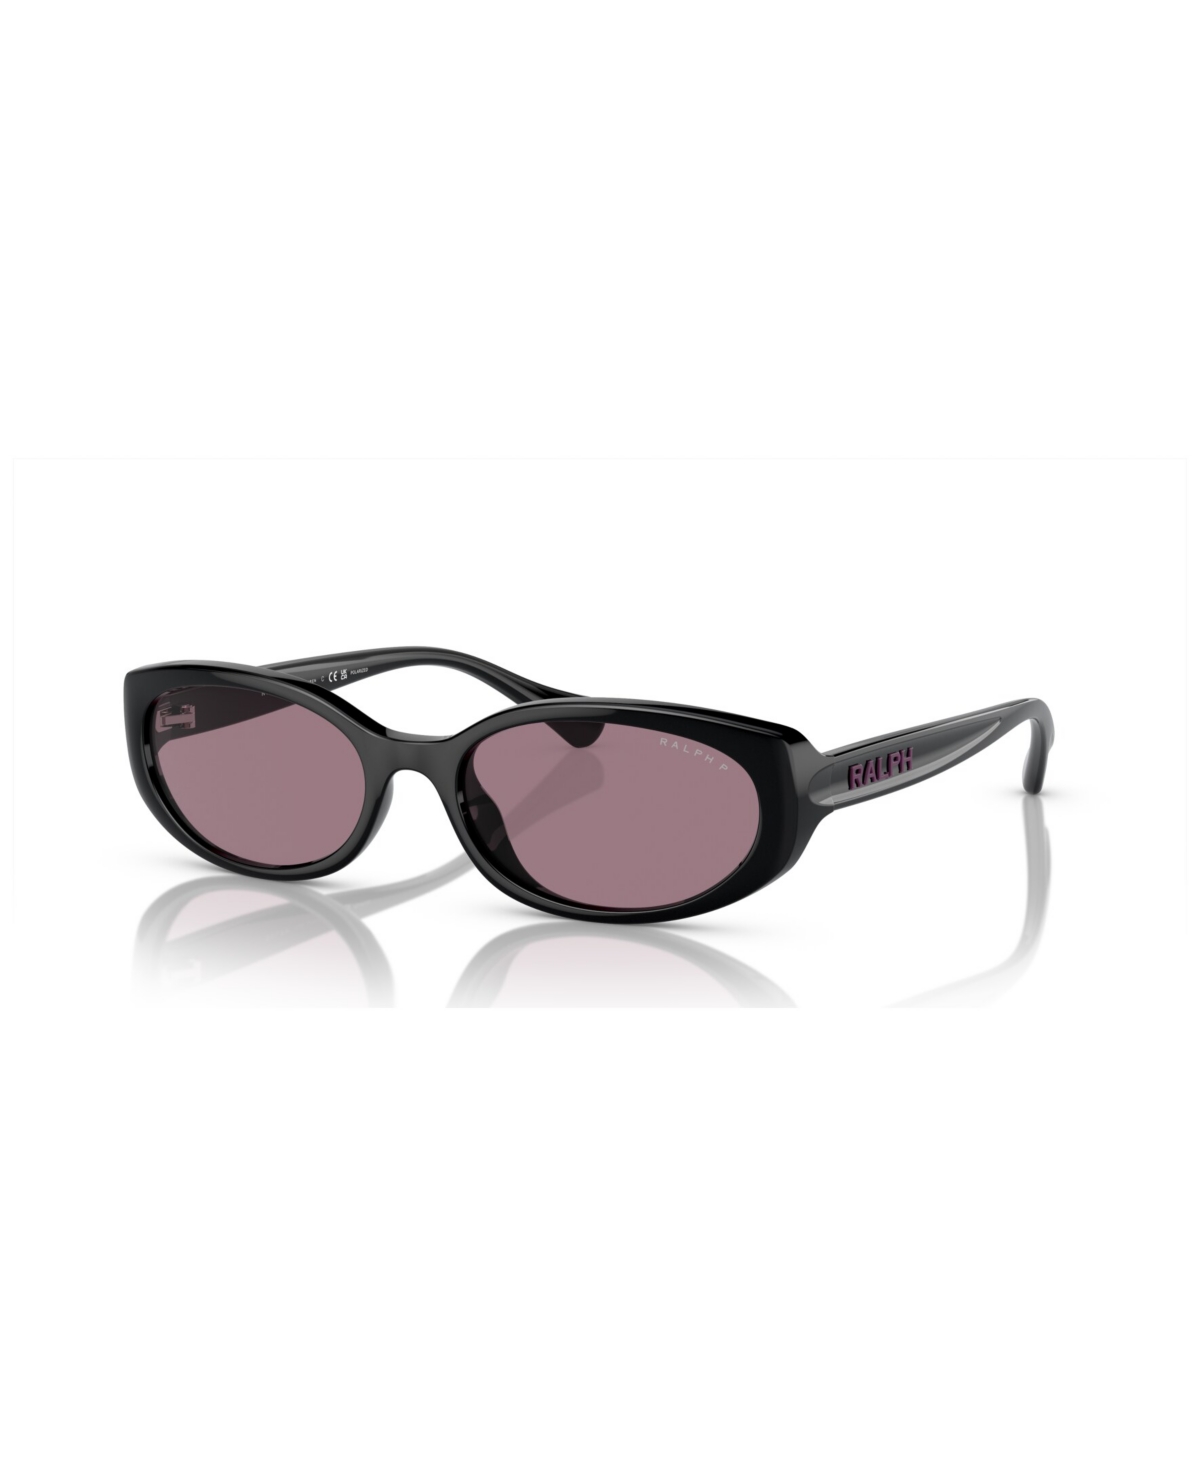 Women's Polarized Sunglasses, Polar RA5306U - Shiny Black